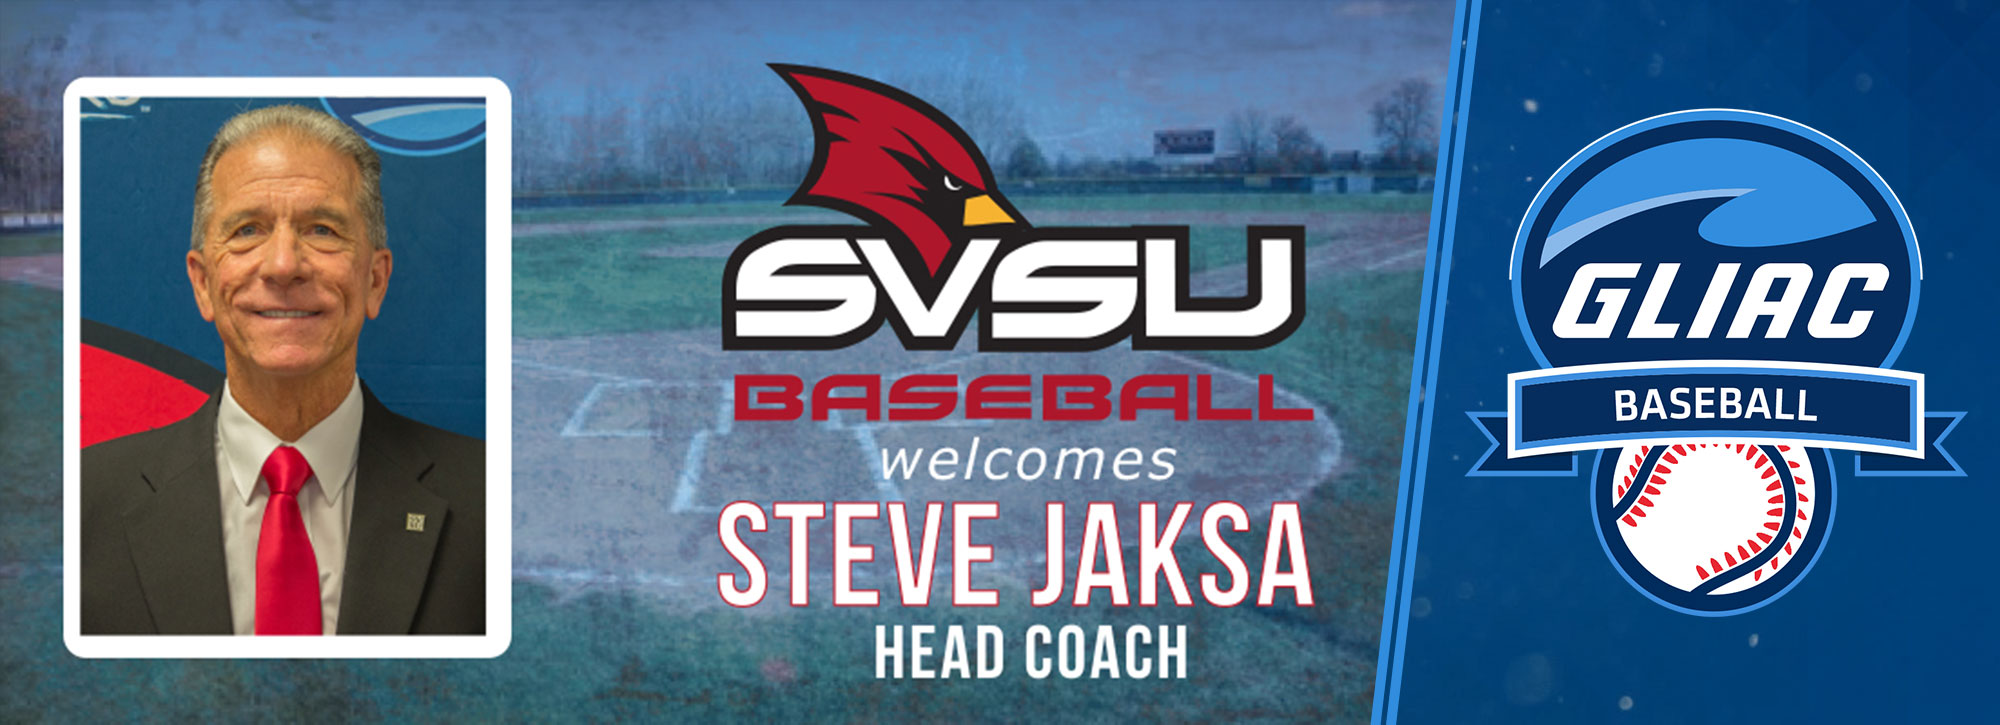 Steve Jaksa Named SVSU Head Baseball Coach